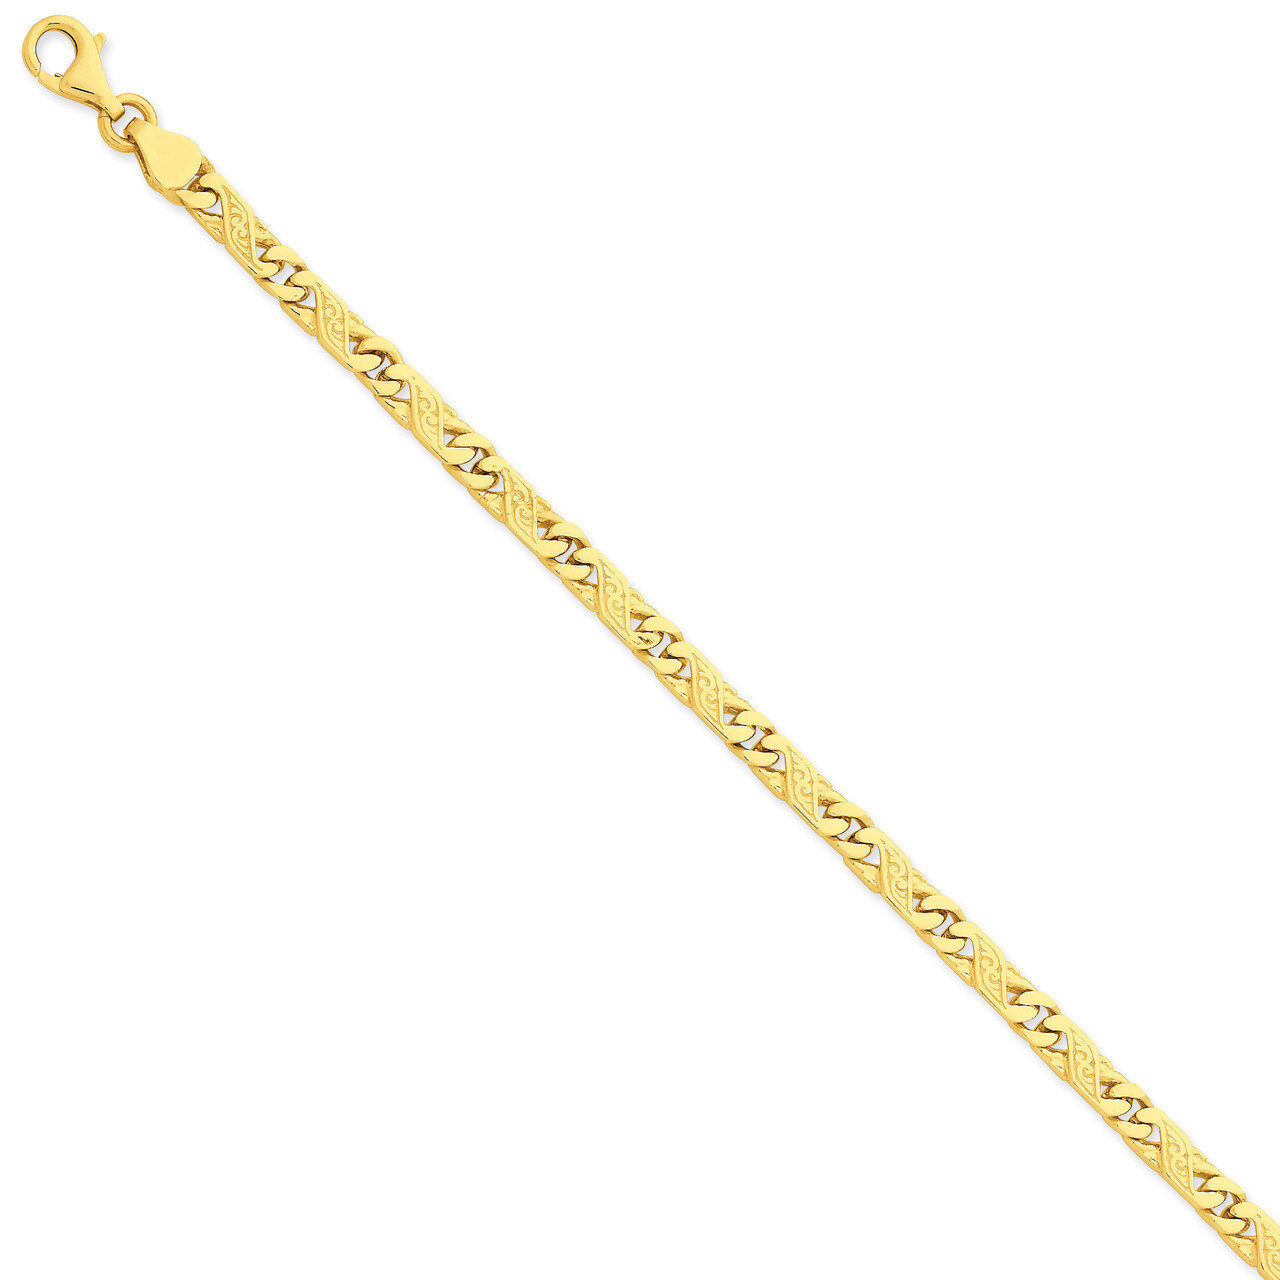 5mm Hand-Polished Fancy Link Chain 24 Inch 14k Gold LK161-24